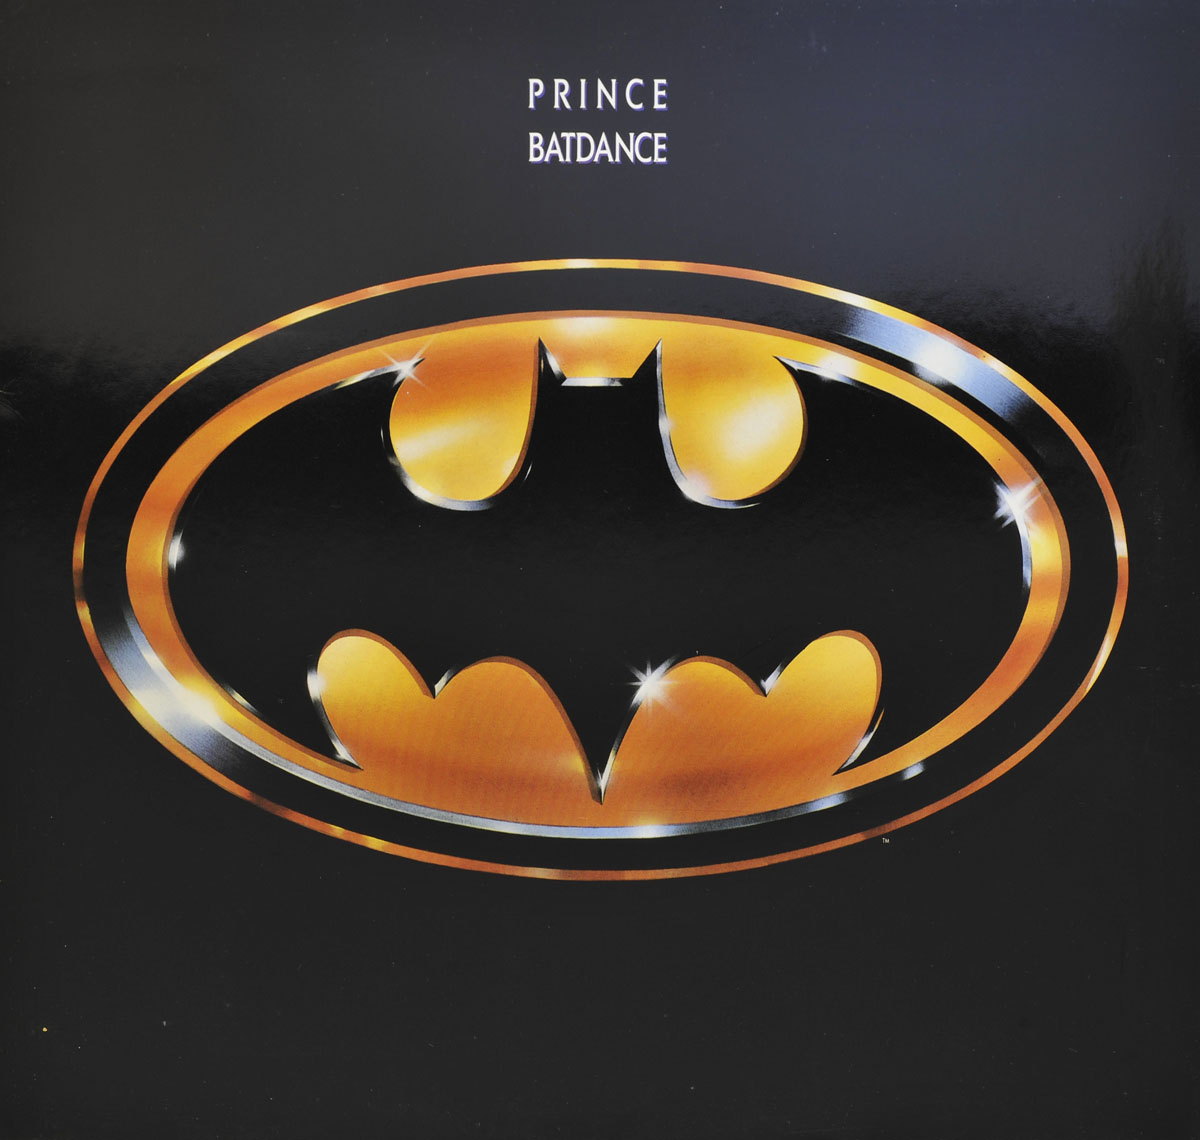 PRINCE Batdance Pop, Soundtrack 12" LP Vinyl Album Gallery & Information